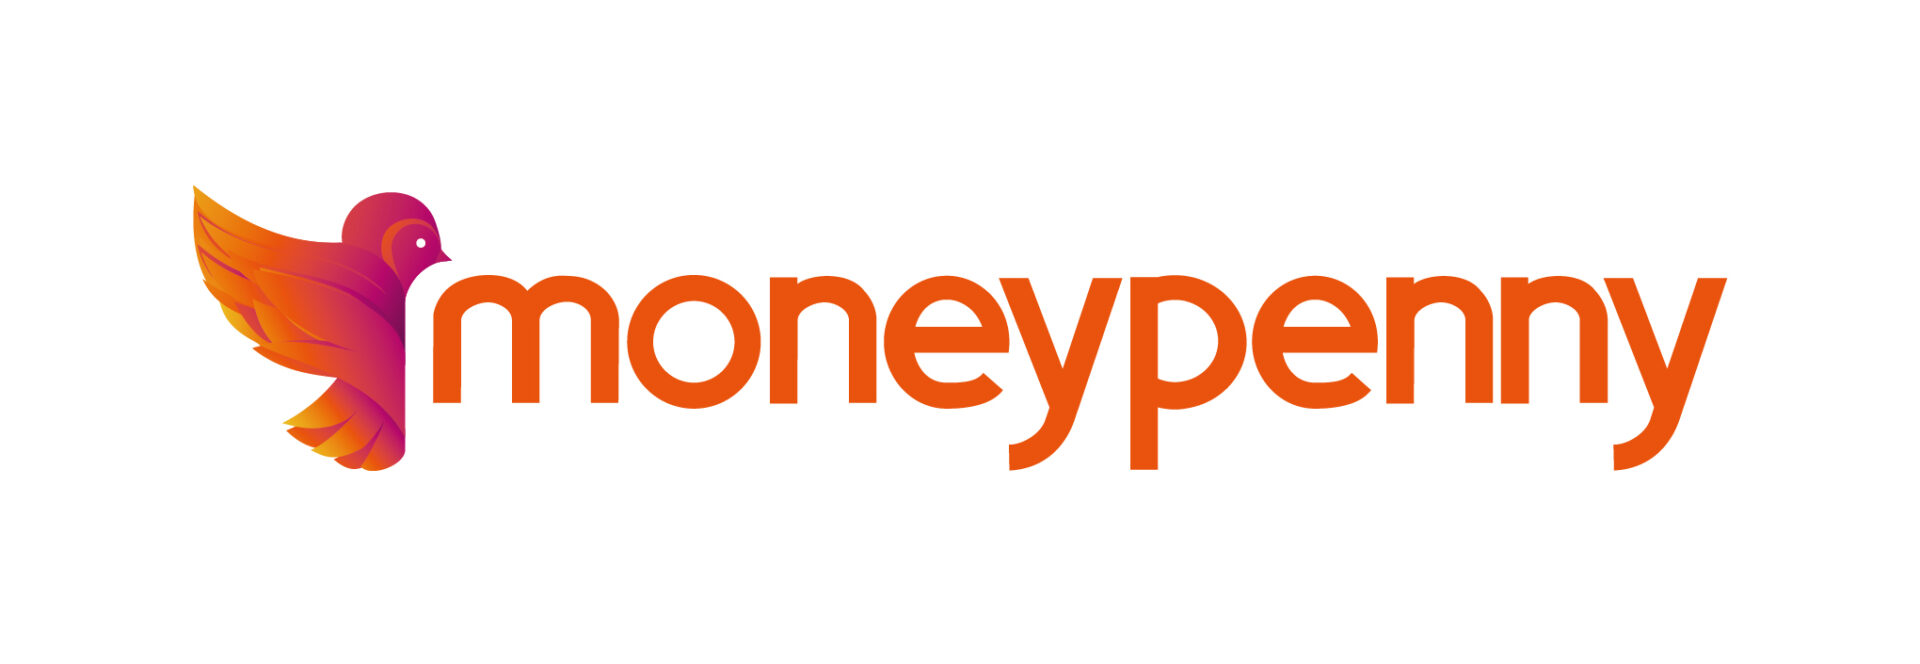 Moneypenny-bird-logo